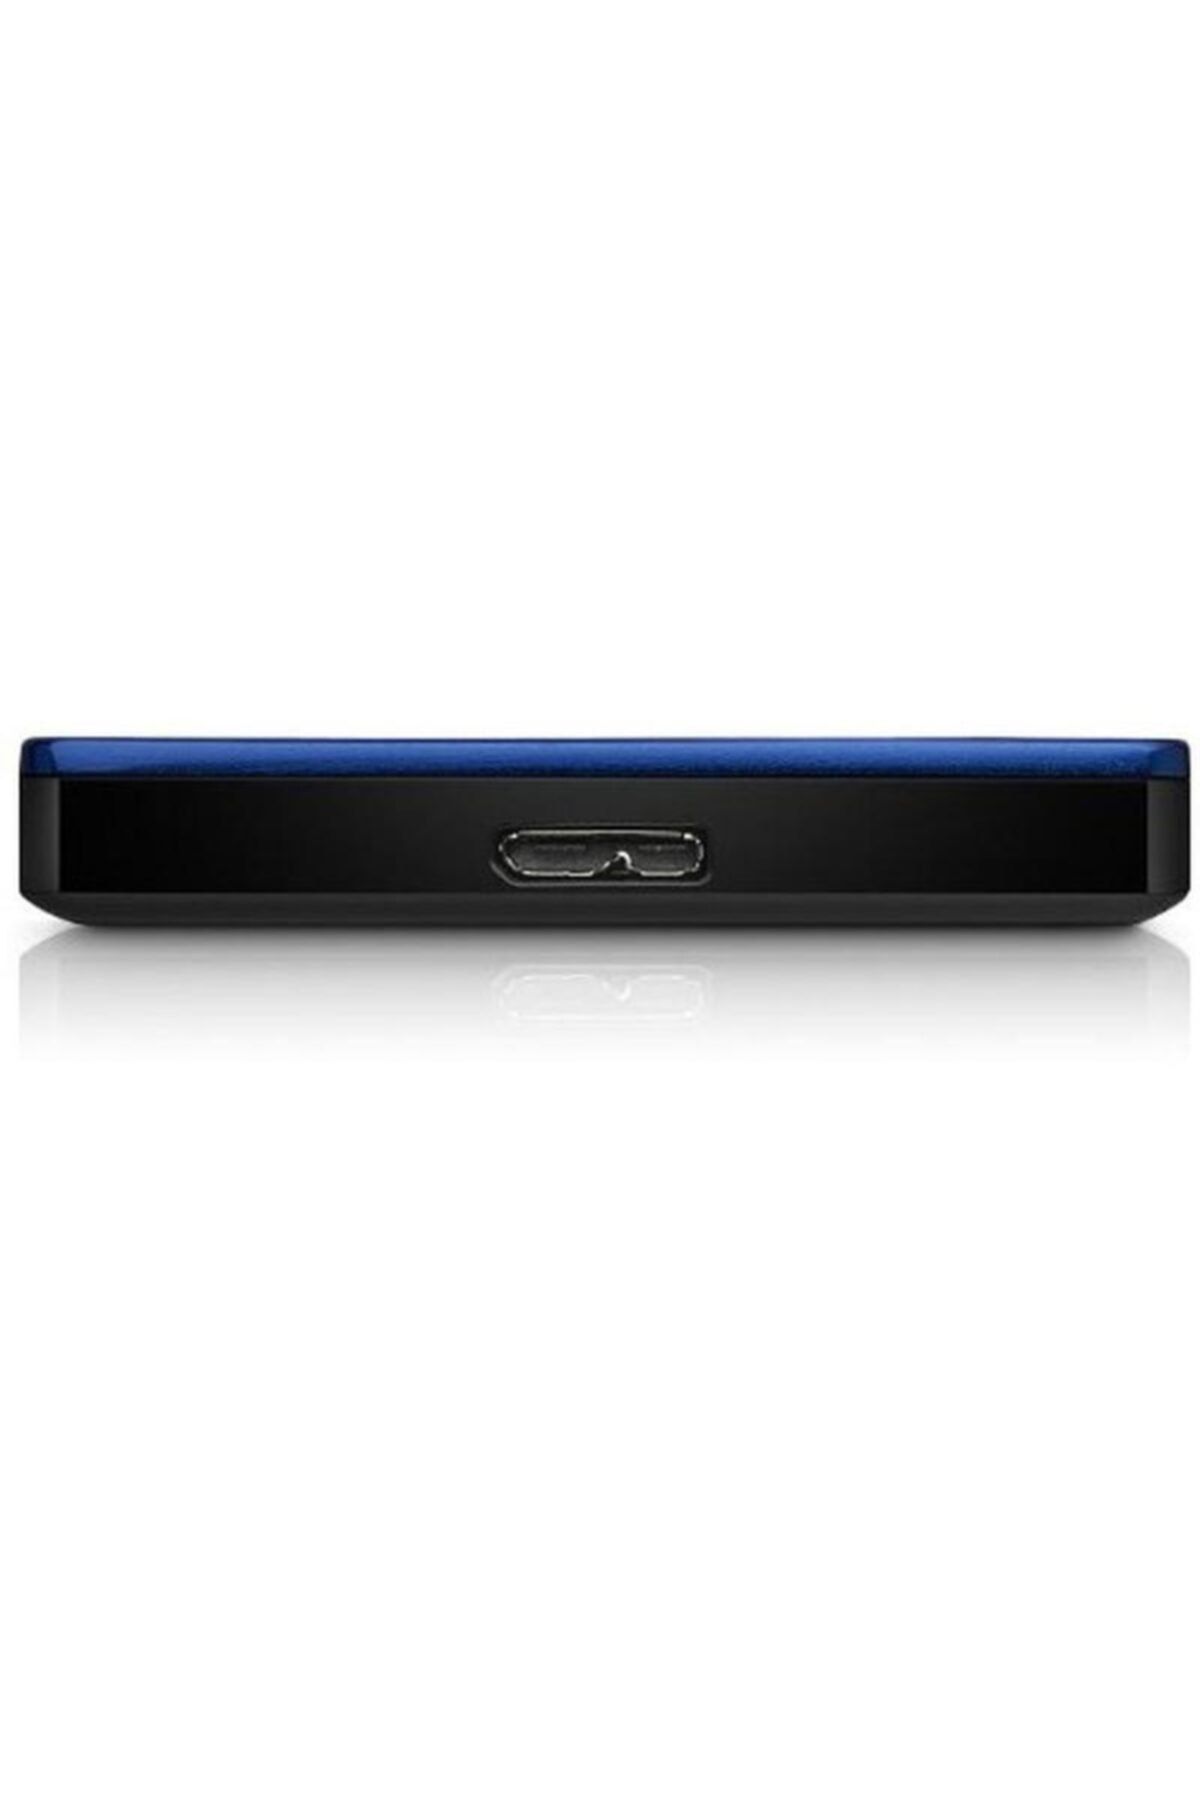 Seagate Backup Plus Slim 1TB 2.5" USB 3.0 Mavi Taşınabilir Disk (STDR1000202)